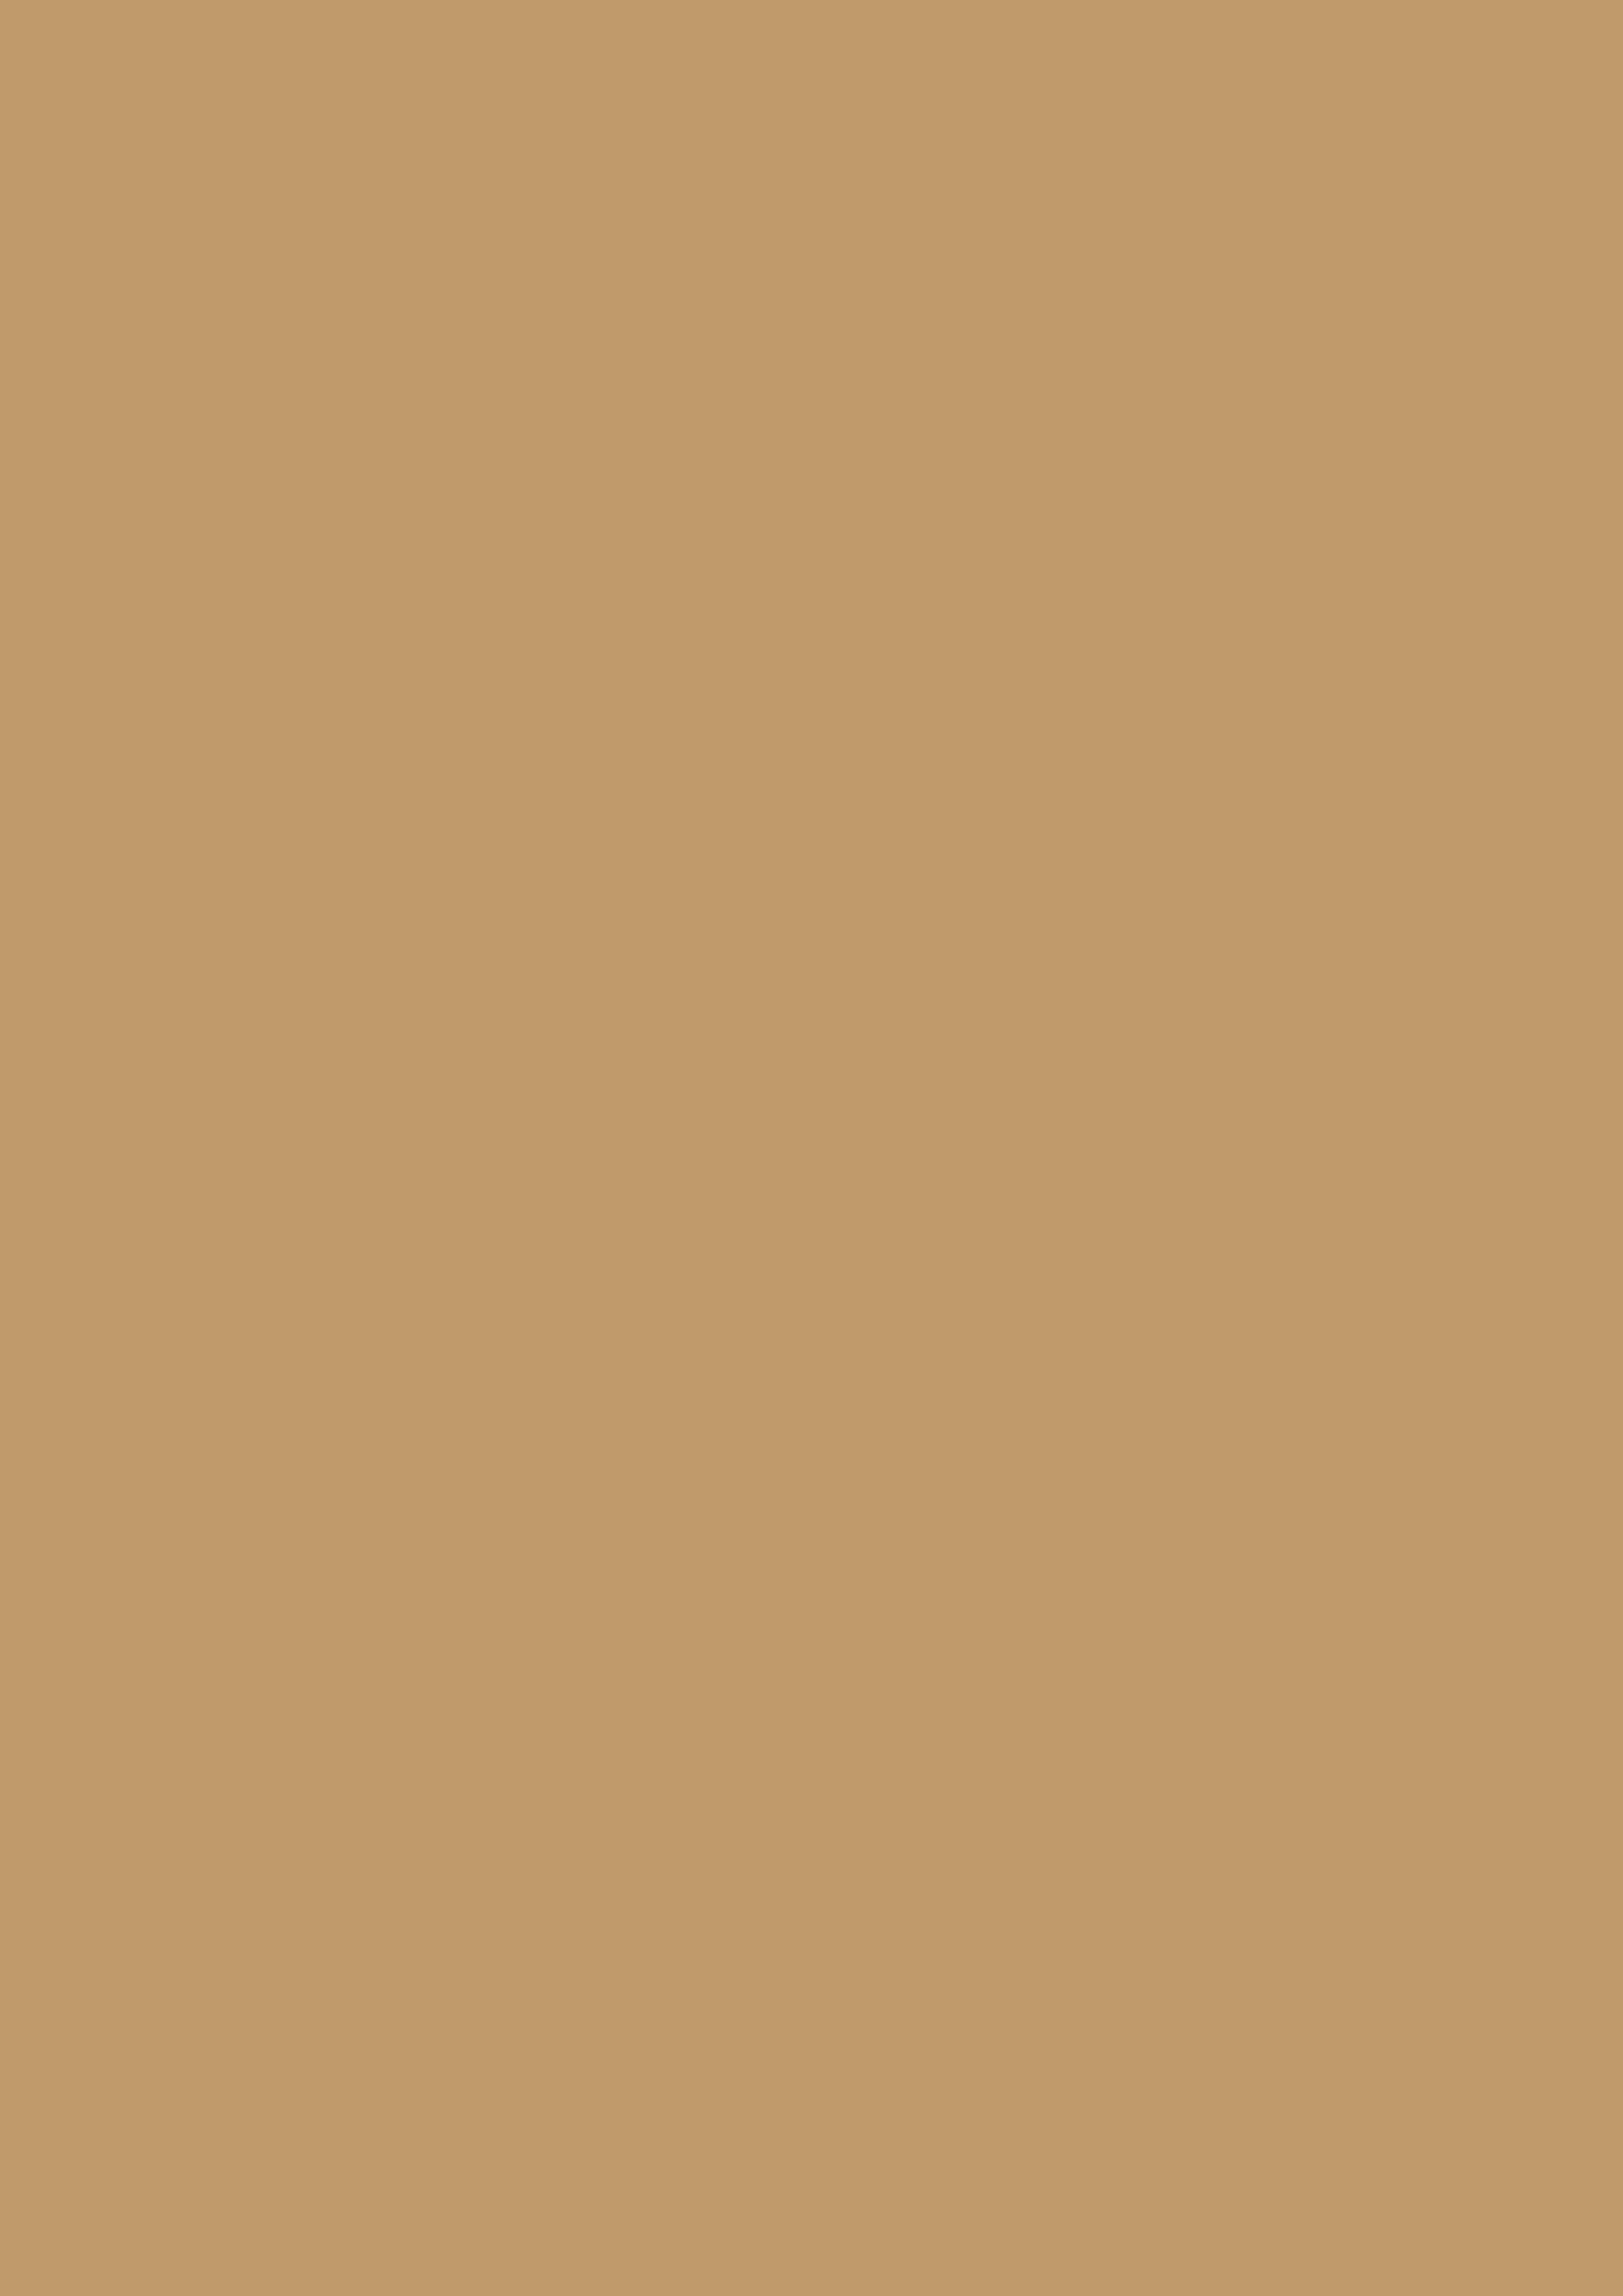 2480x3508 Desert Solid Color Background